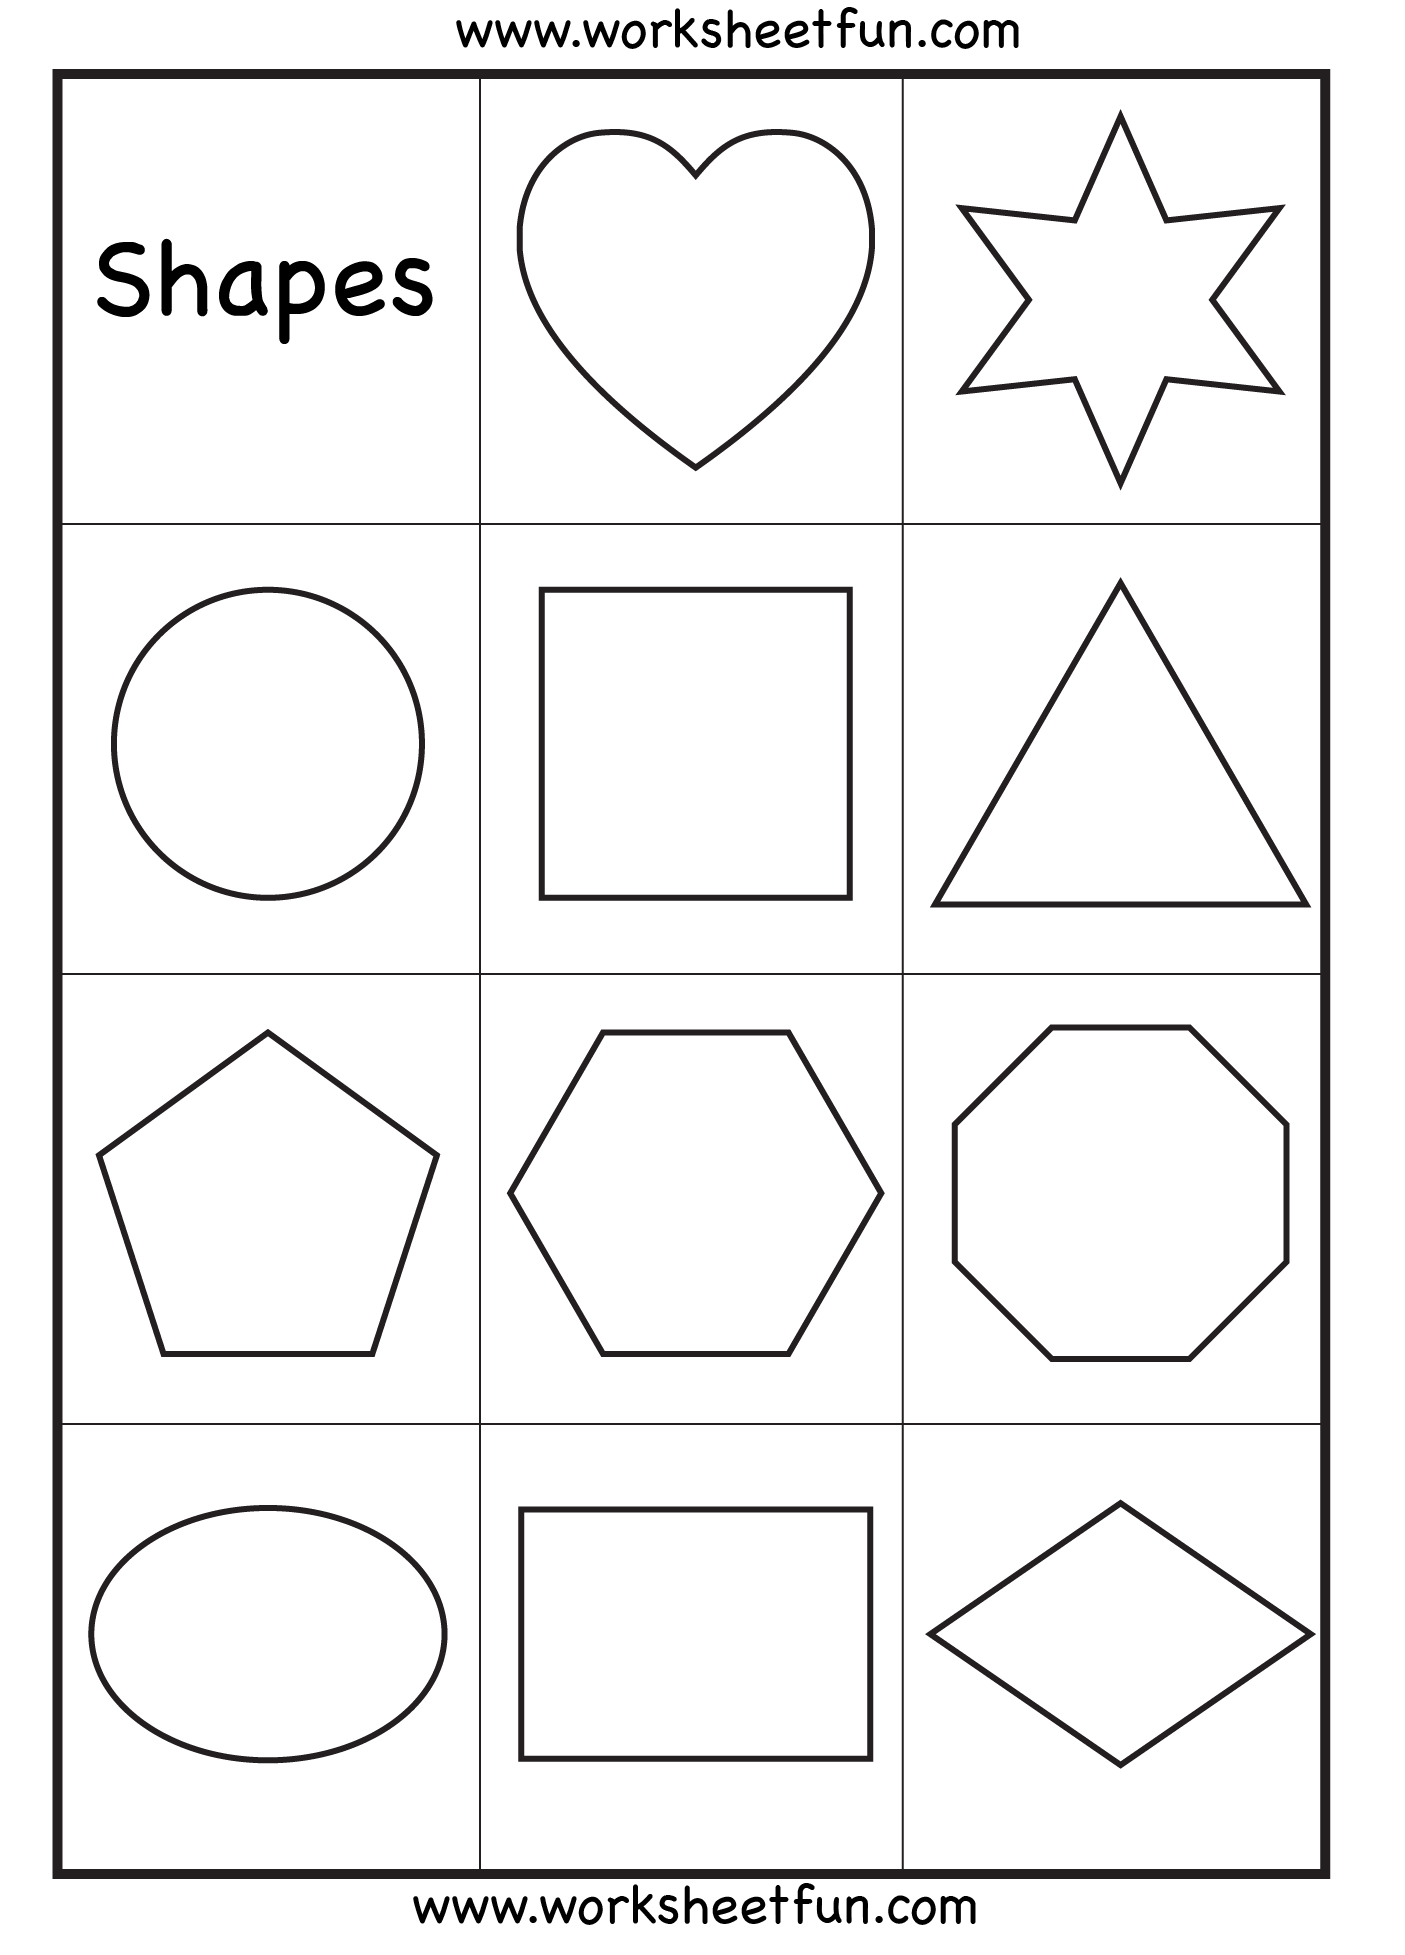 Preschool Shapes Worksheet FREE Printable Worksheets Shapes Worksheets Shapes Preschool Printable Shapes